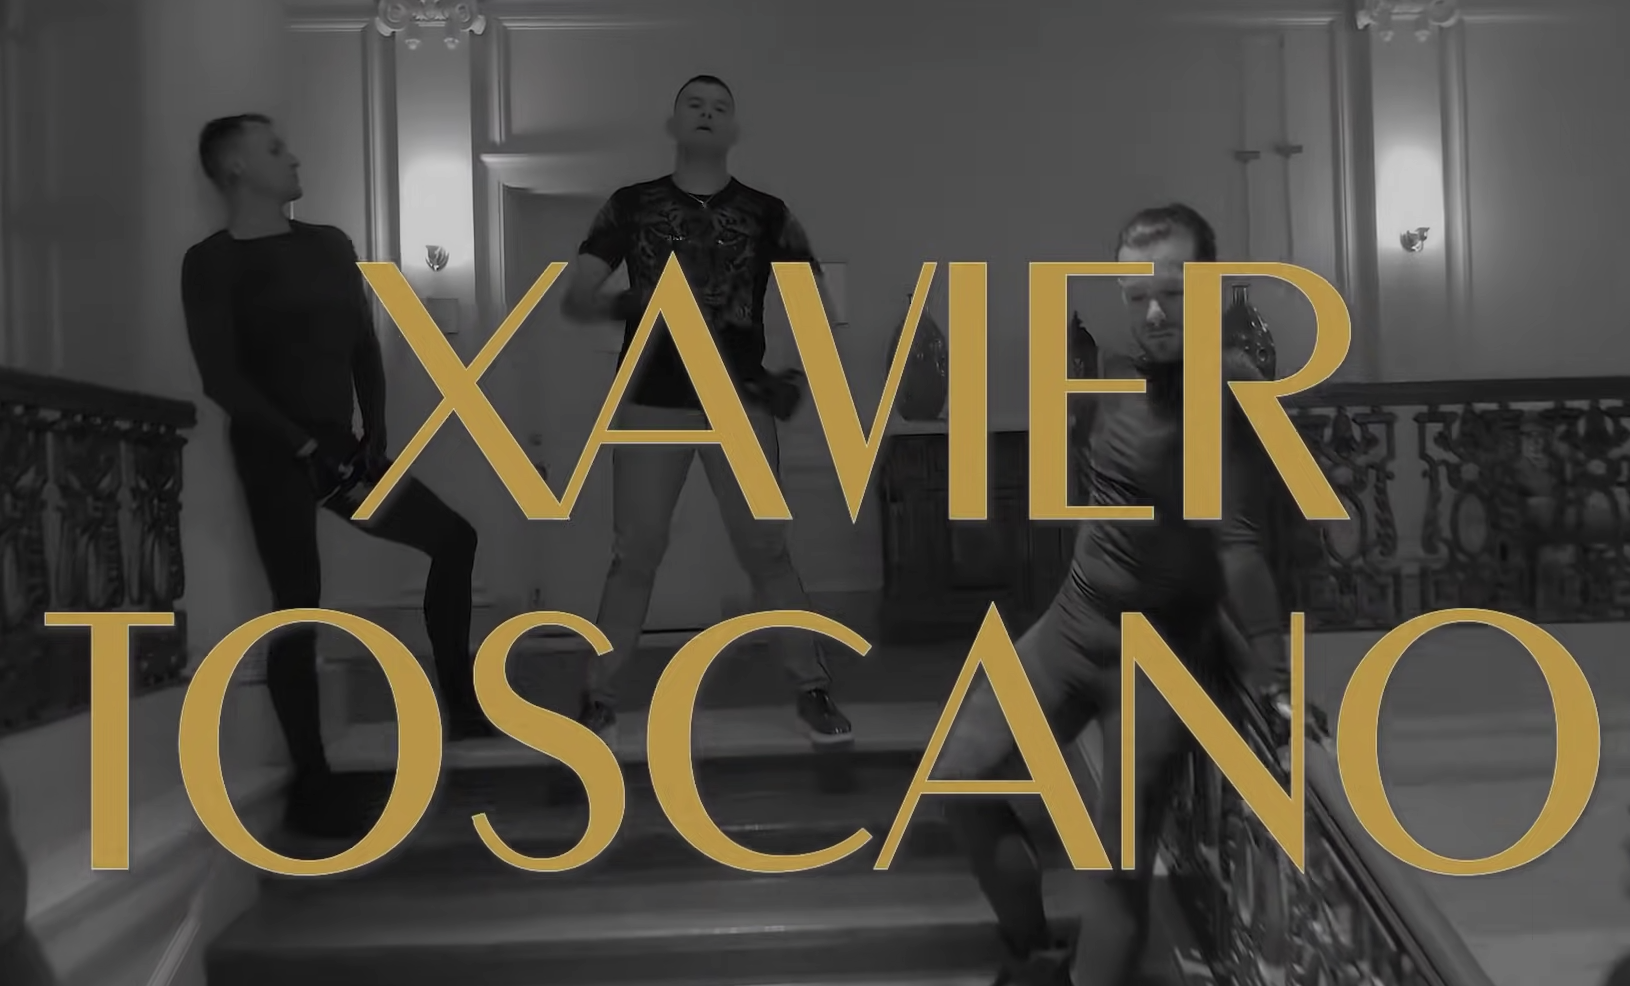 Xavier Toscano ‘Made It Look Easy’ with California Vid Win